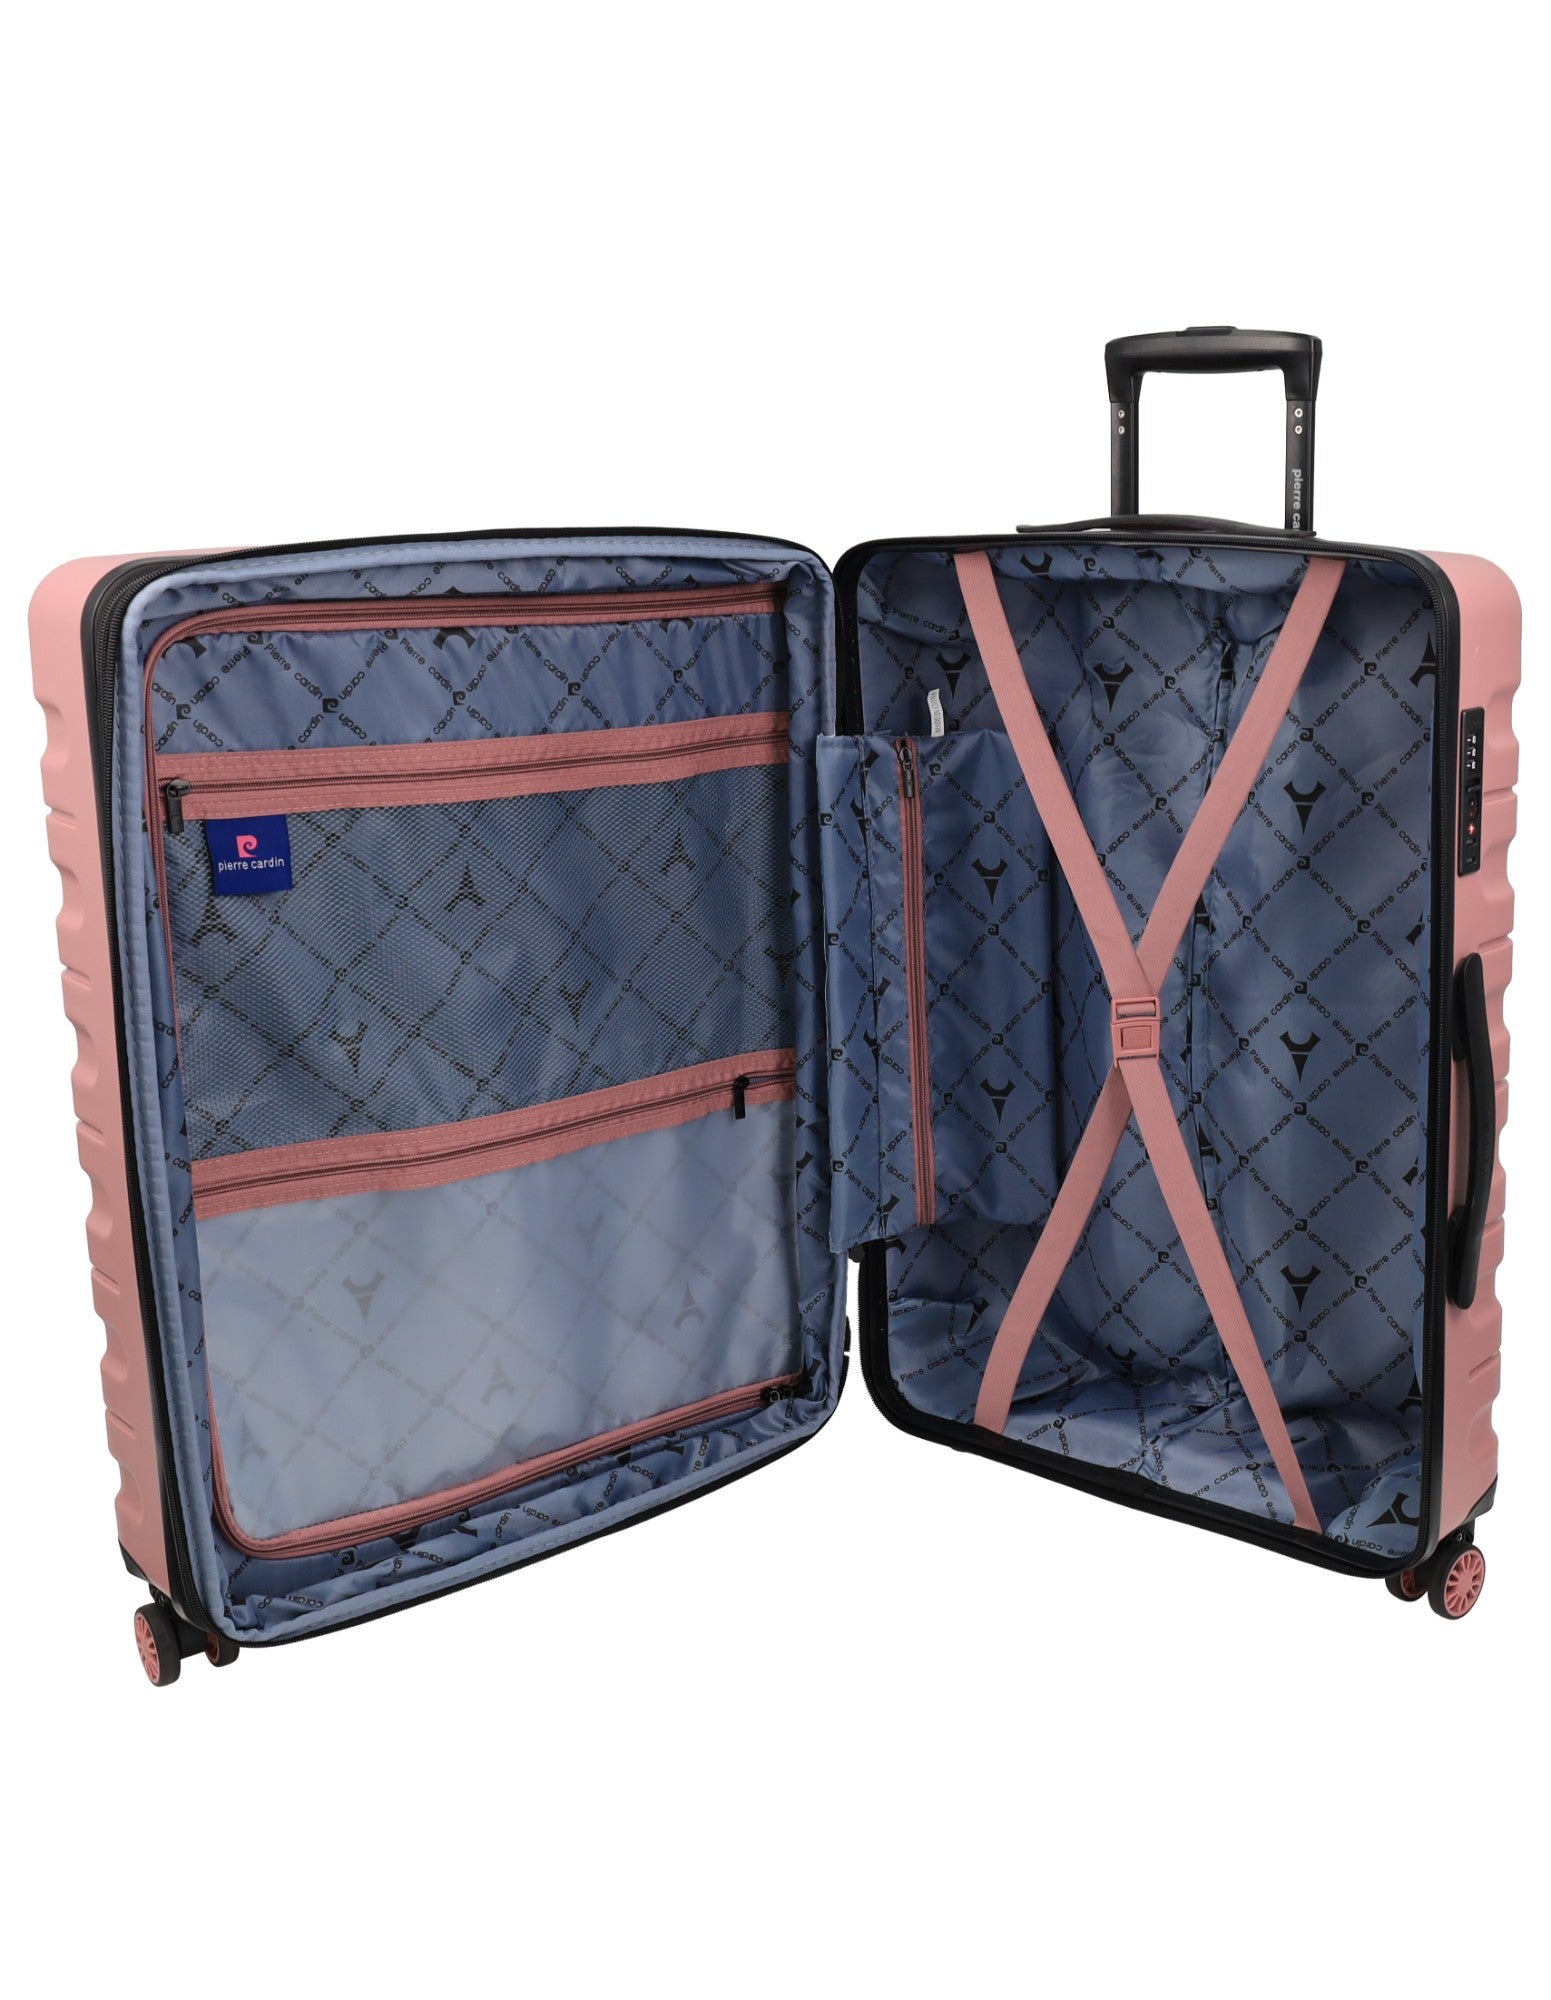 Pierre Cardin 70cm MEDIUM Hard Shell Suitcase in Rose